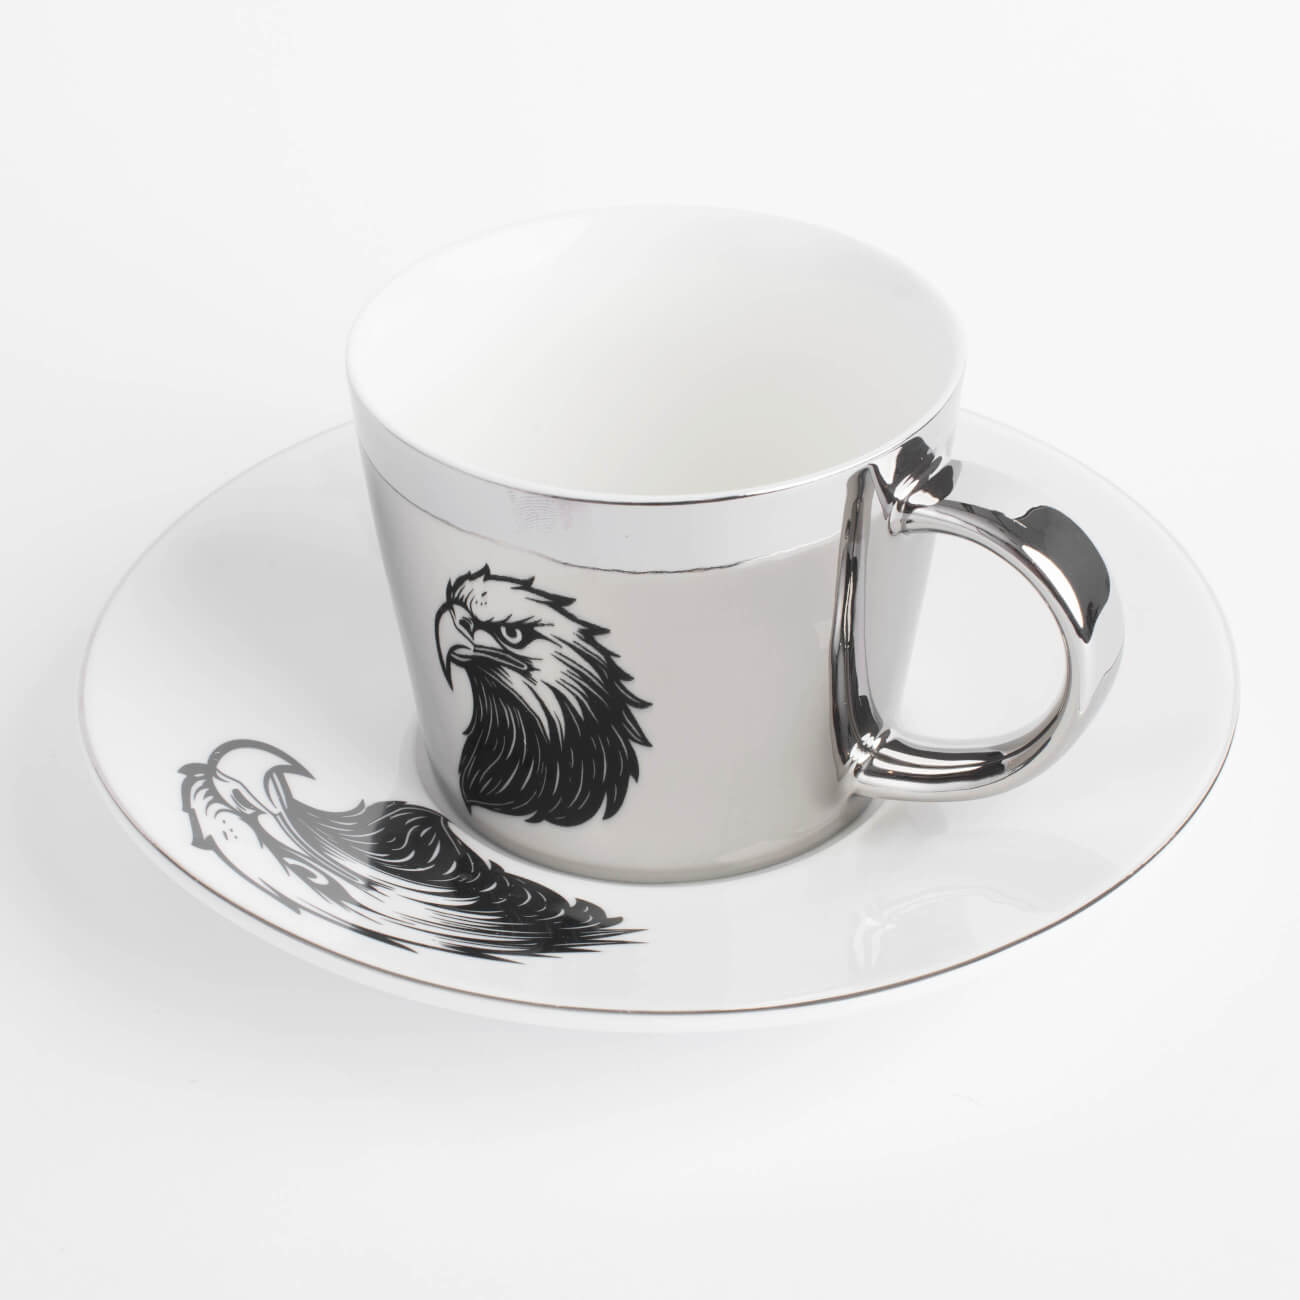 Пара чайная, 1 перс, 2 пр, 230 мл, фарфор P, бело-серебристая, Орел, Eagle римский орел орел завоеватель